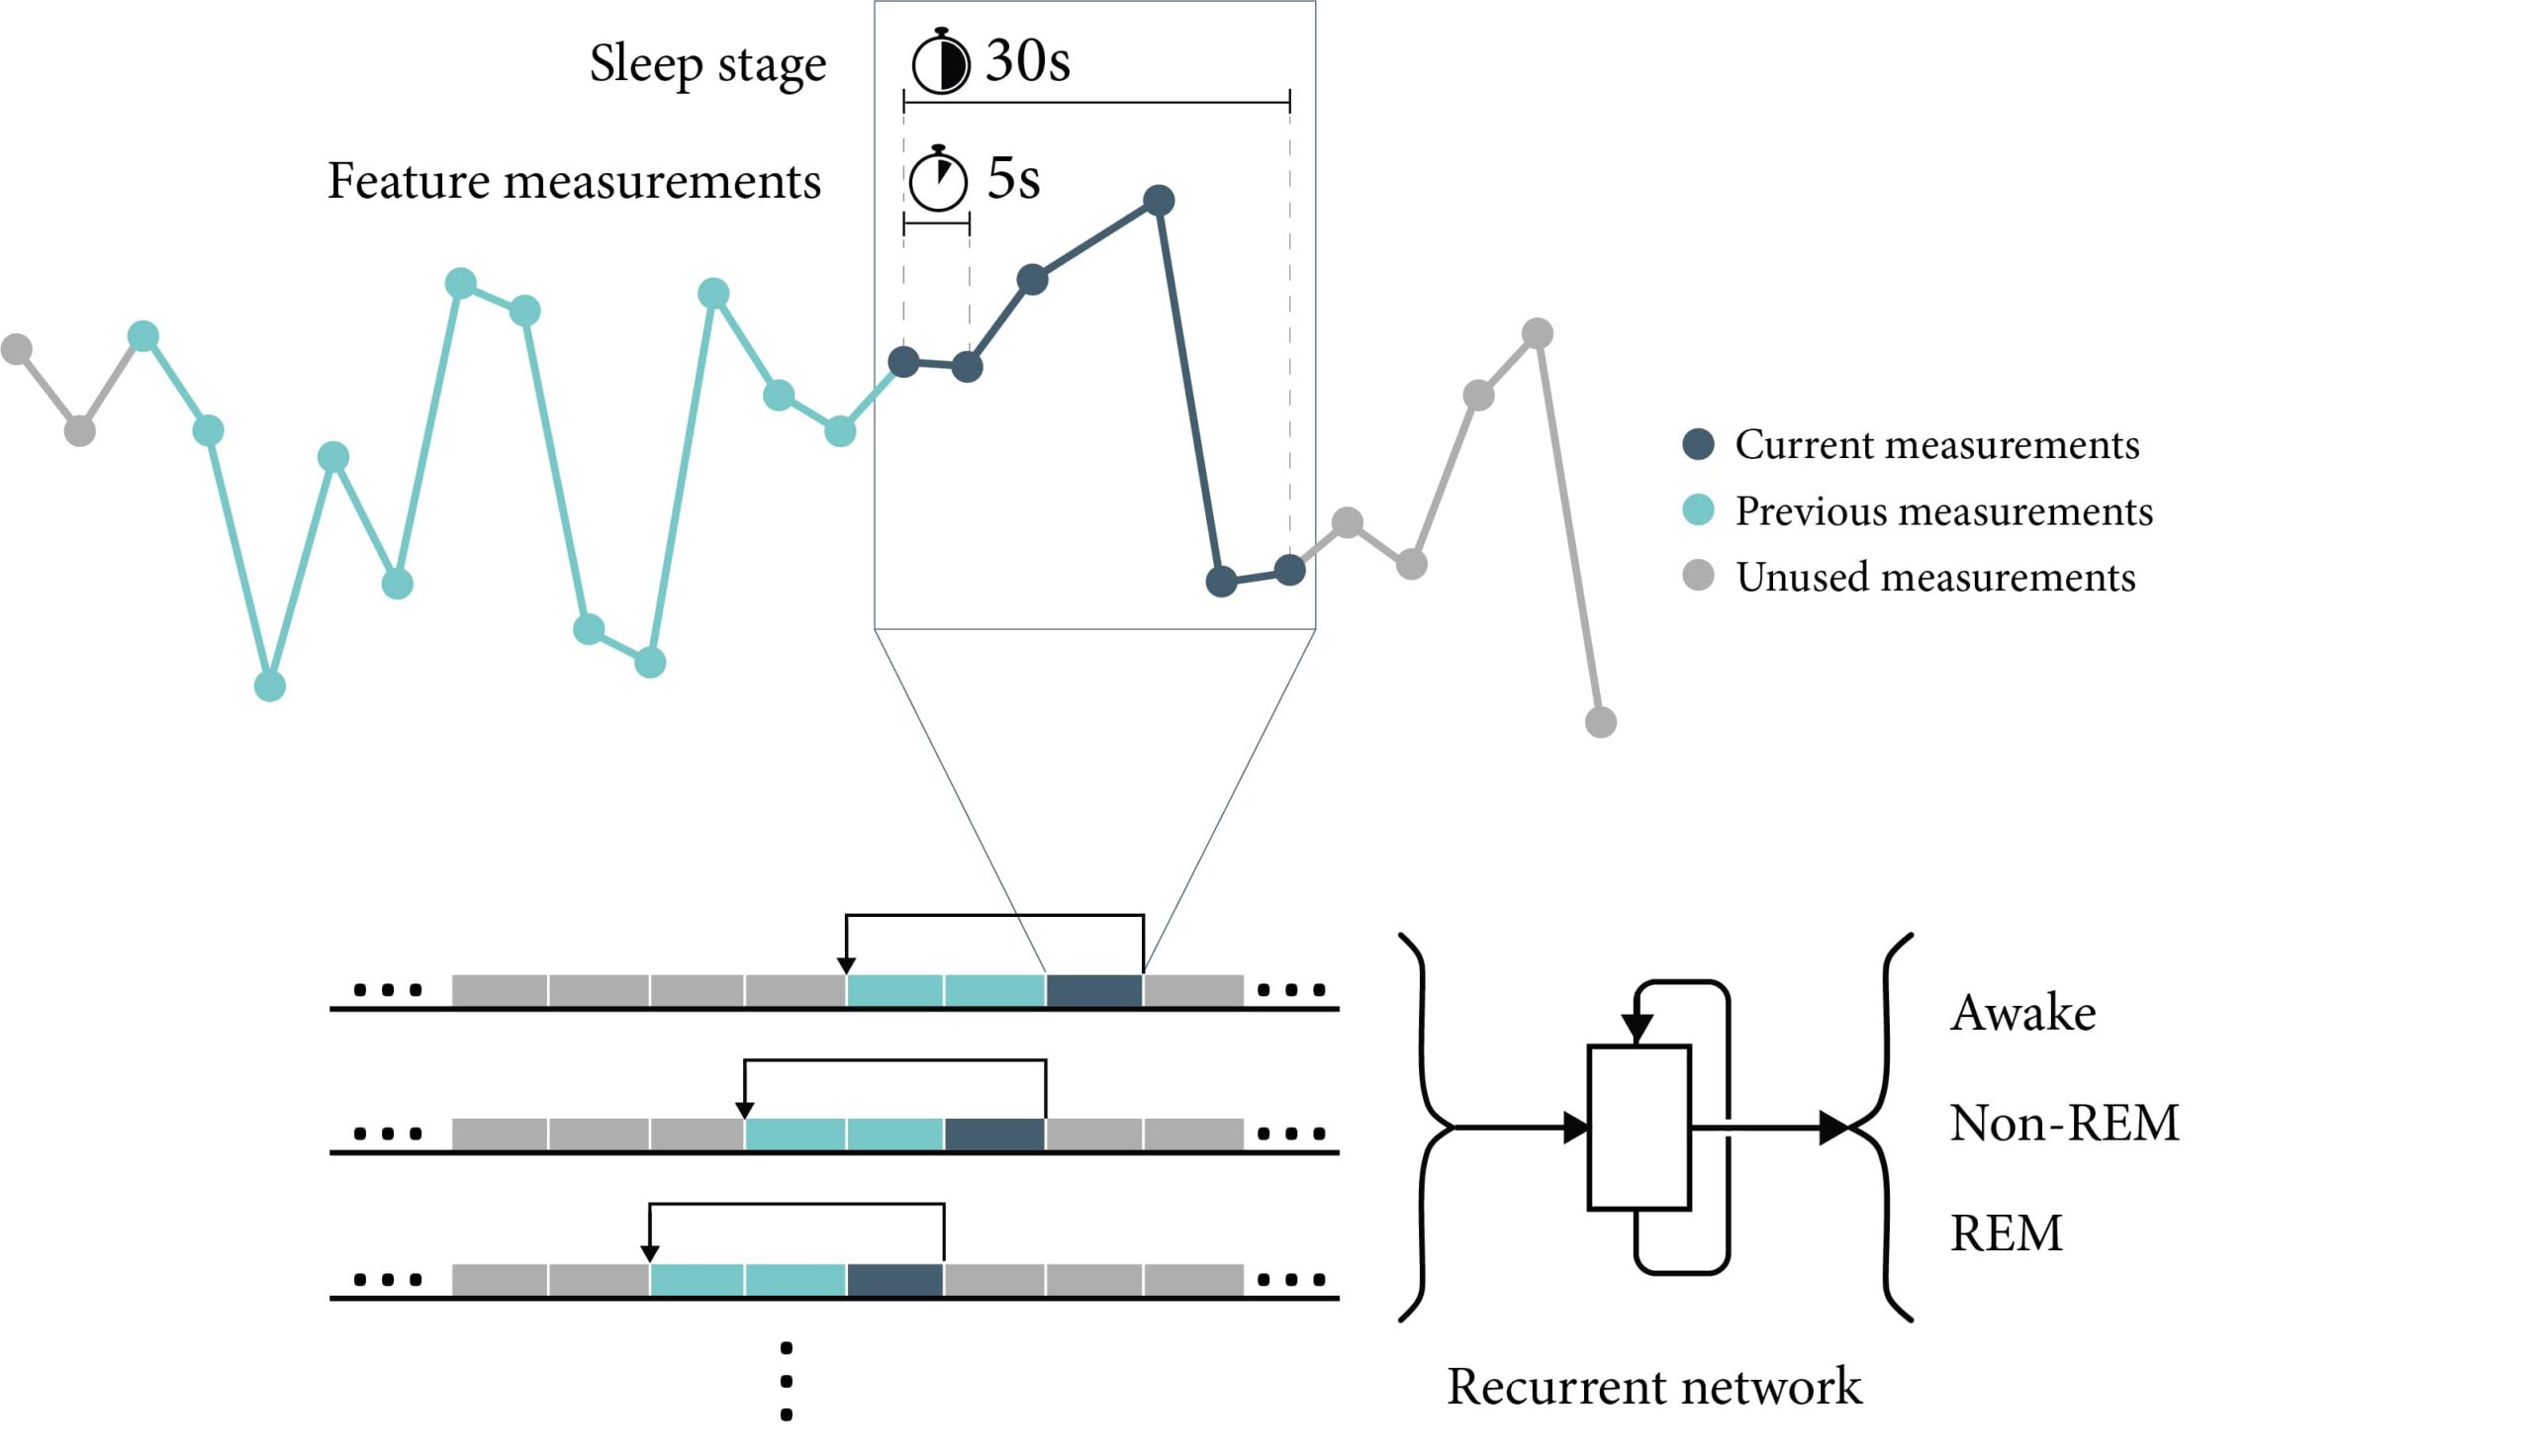 Three-level Sleep Stage Classification Based on Wrist-worn Accelerometry Data Alone